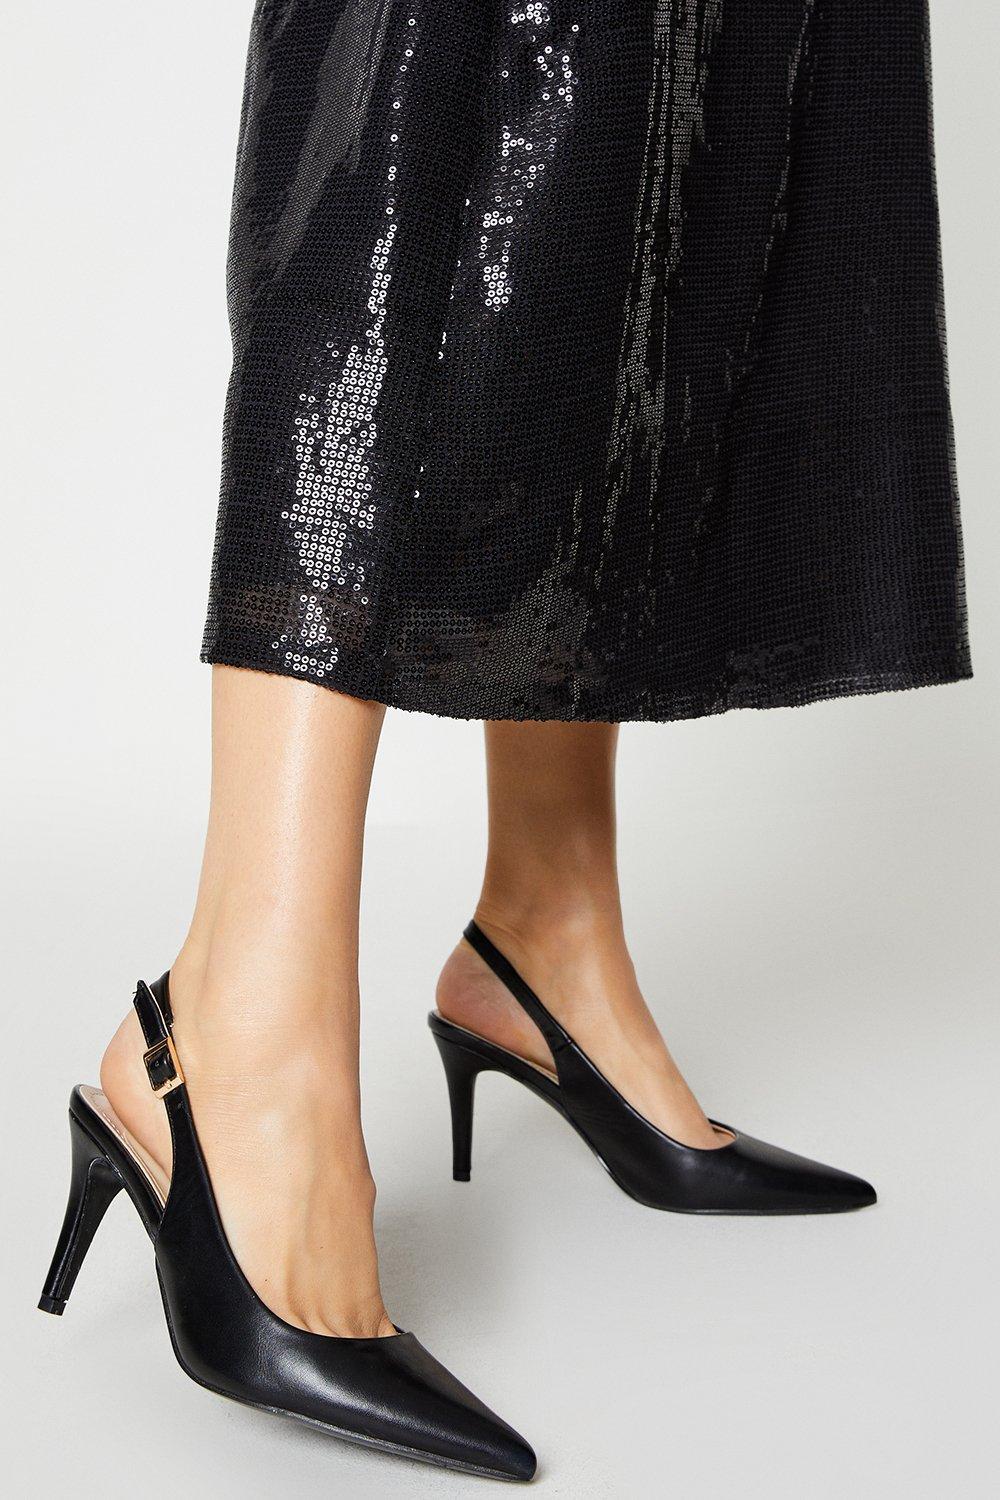 Women’s Eden Comfort Stiletto Heel Sling Back Court Shoes - black - 8